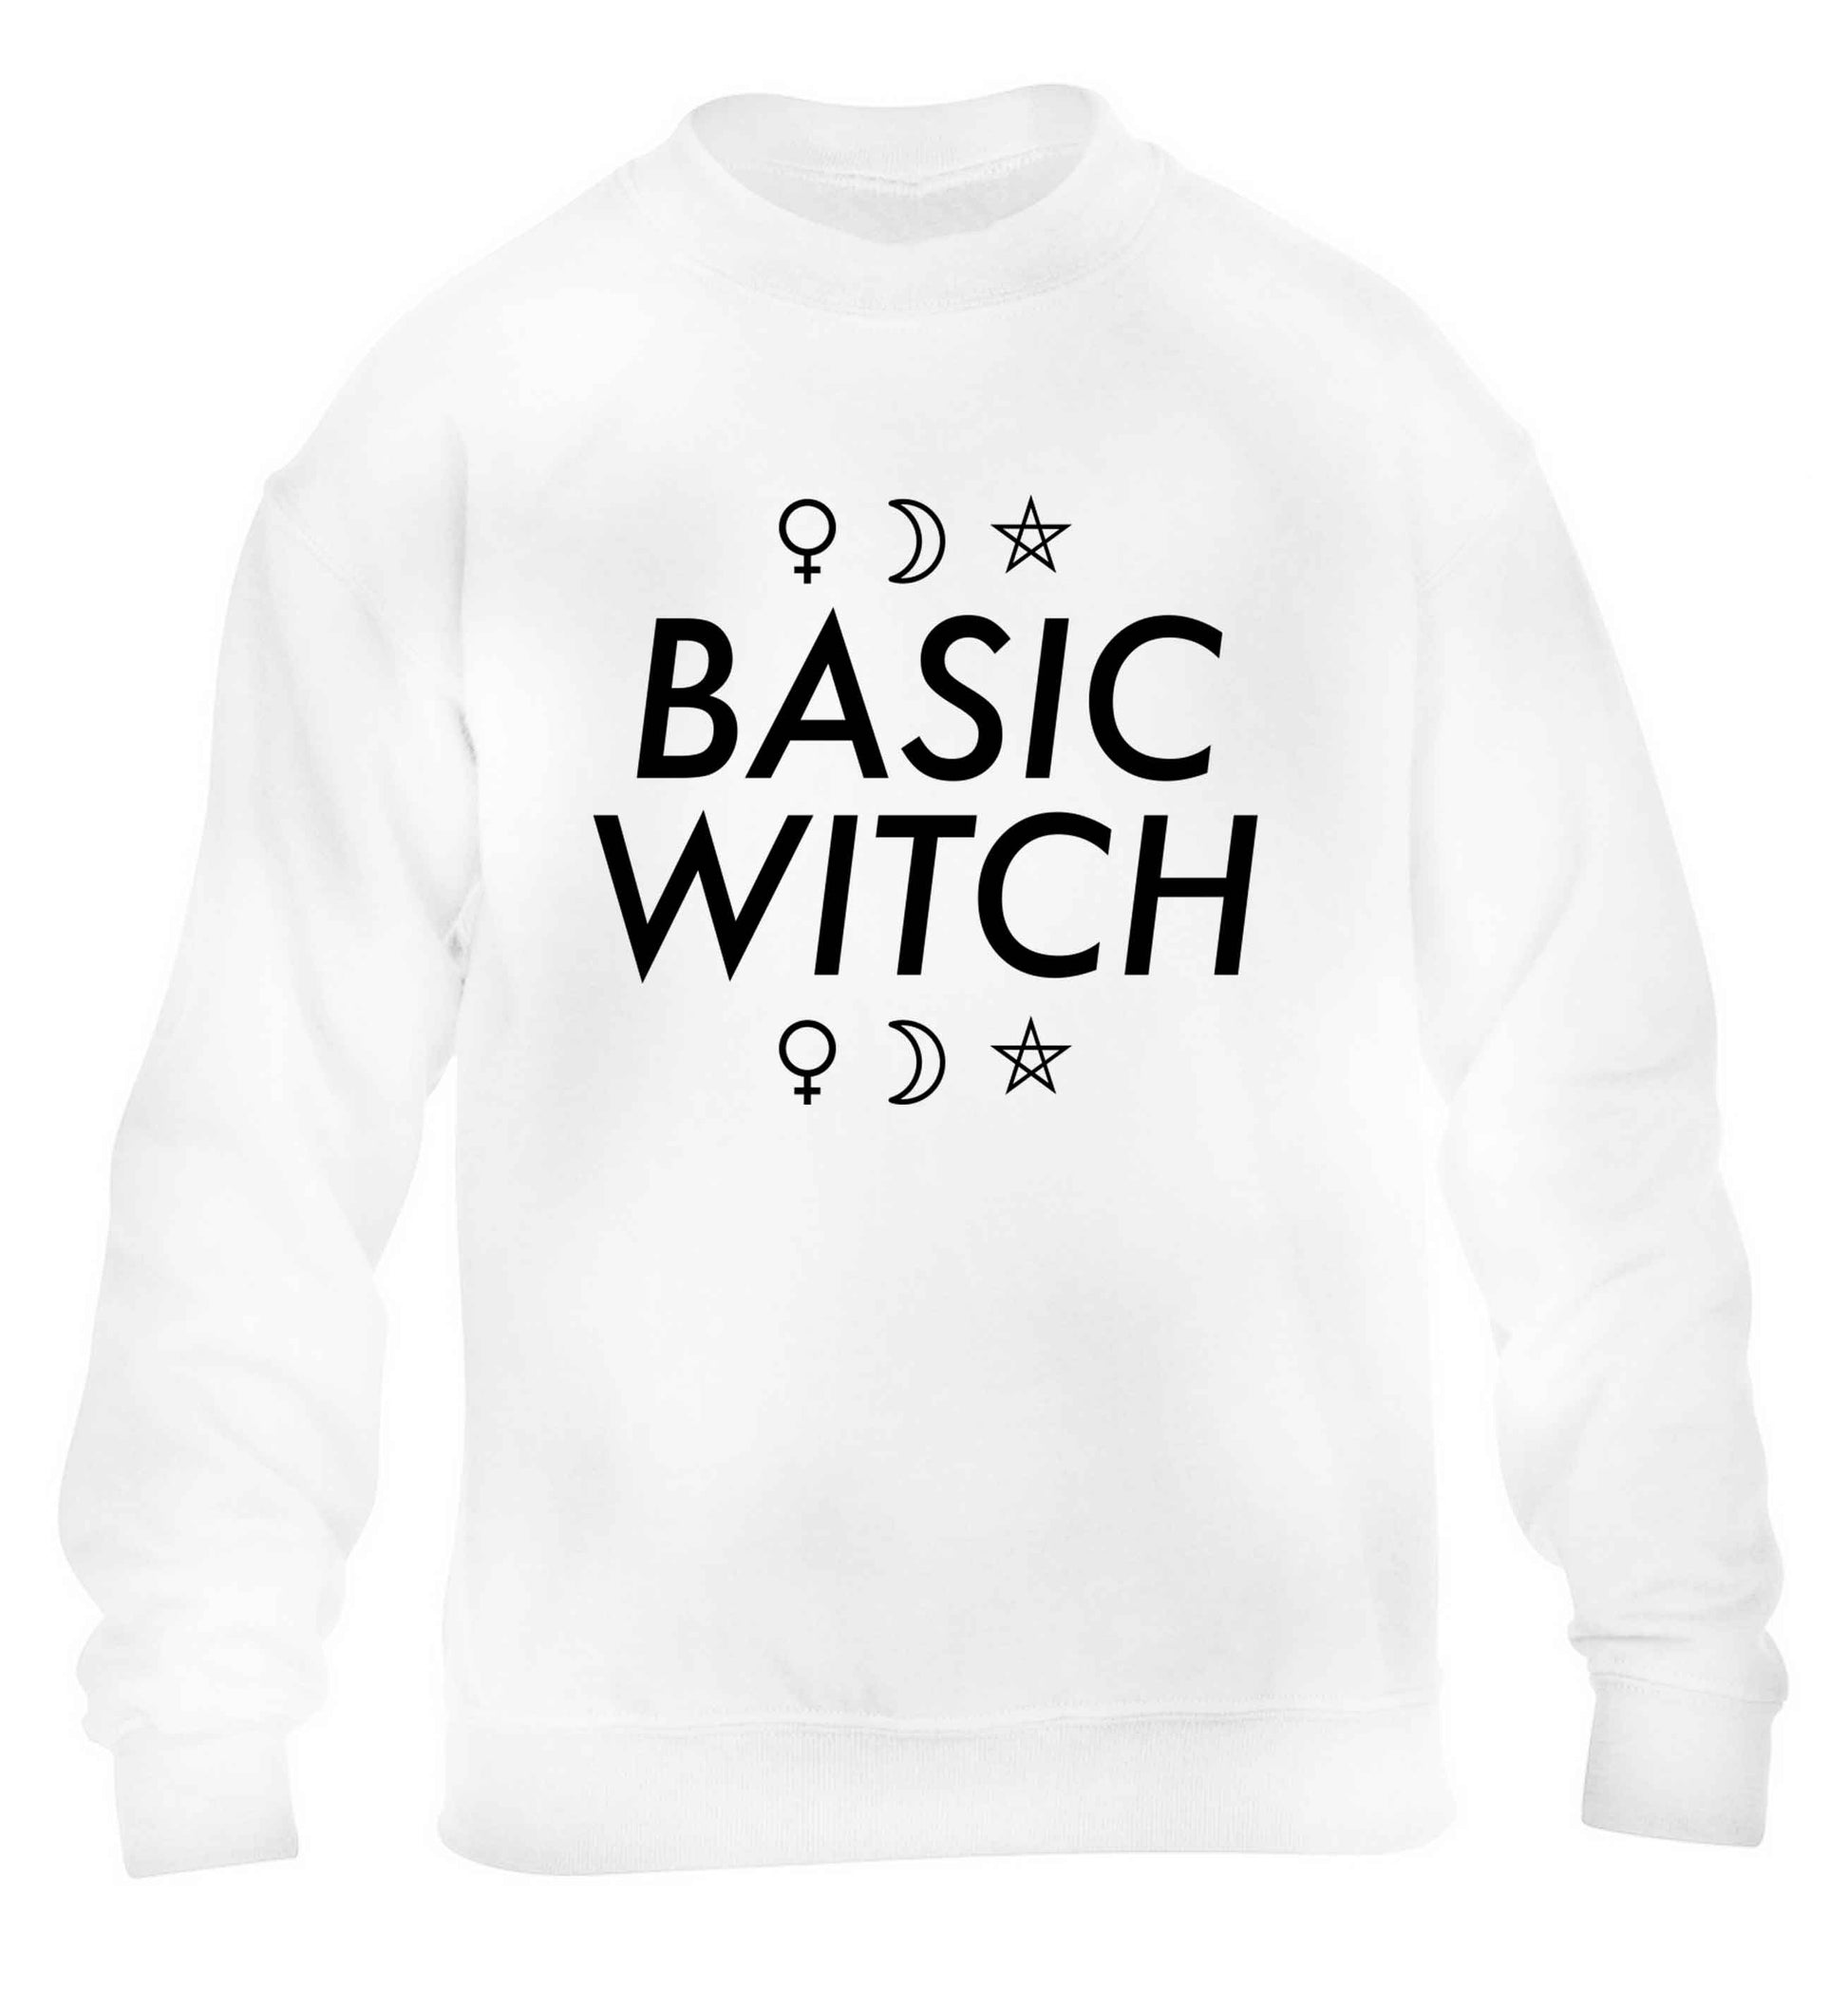 Basic witch 1 children's white sweater 12-13 Years